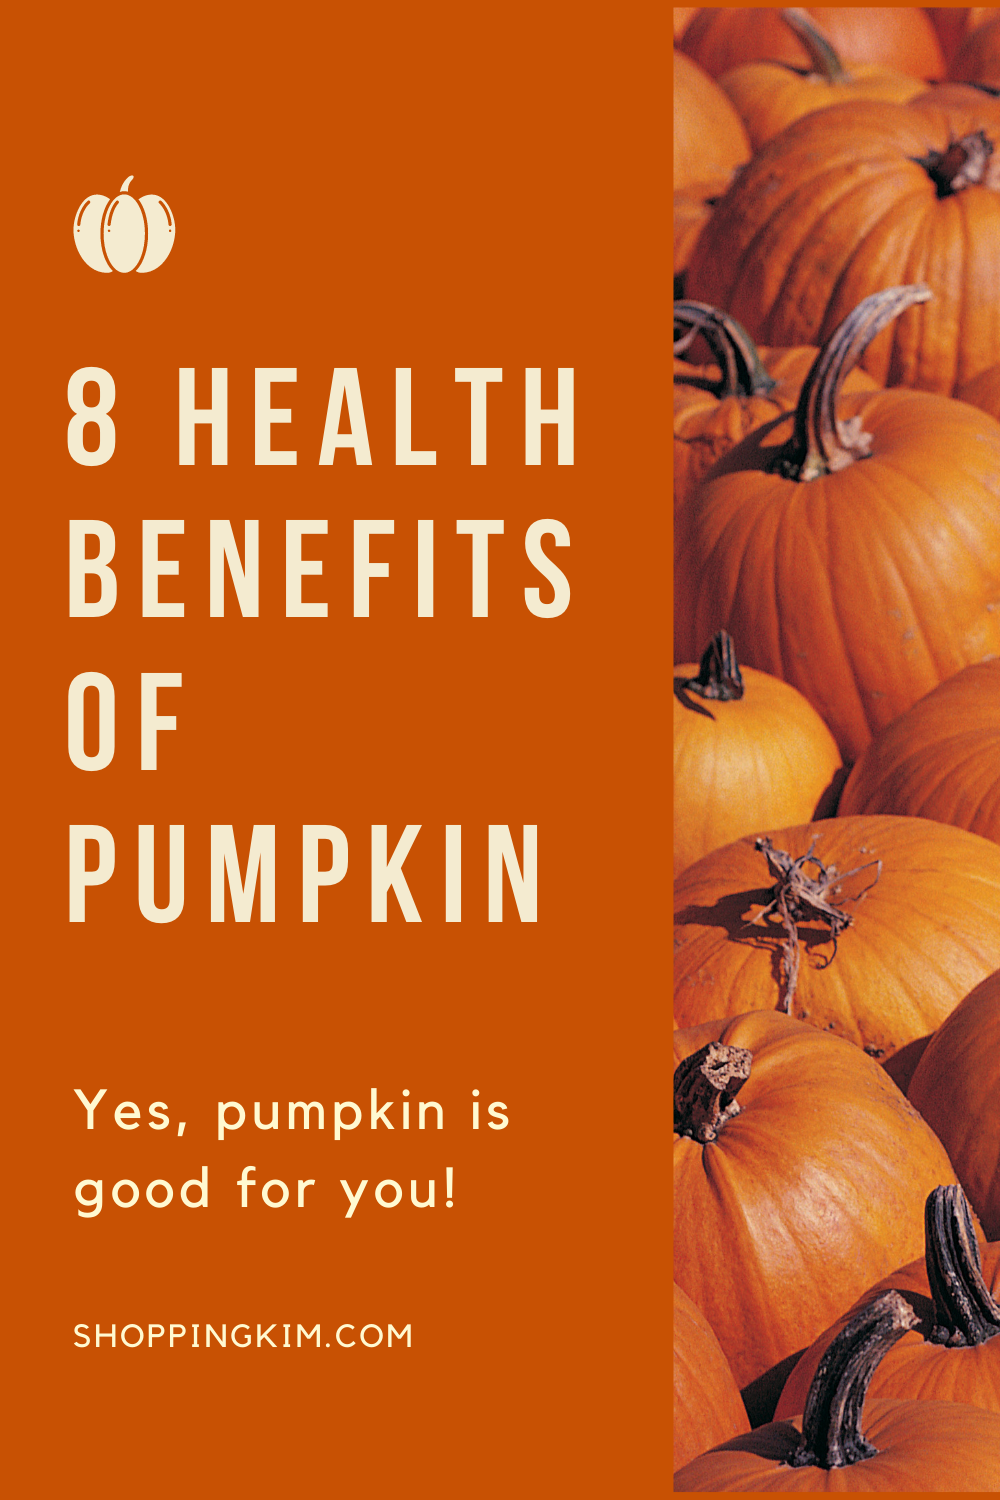 8 Health Benefits of Pumpkins